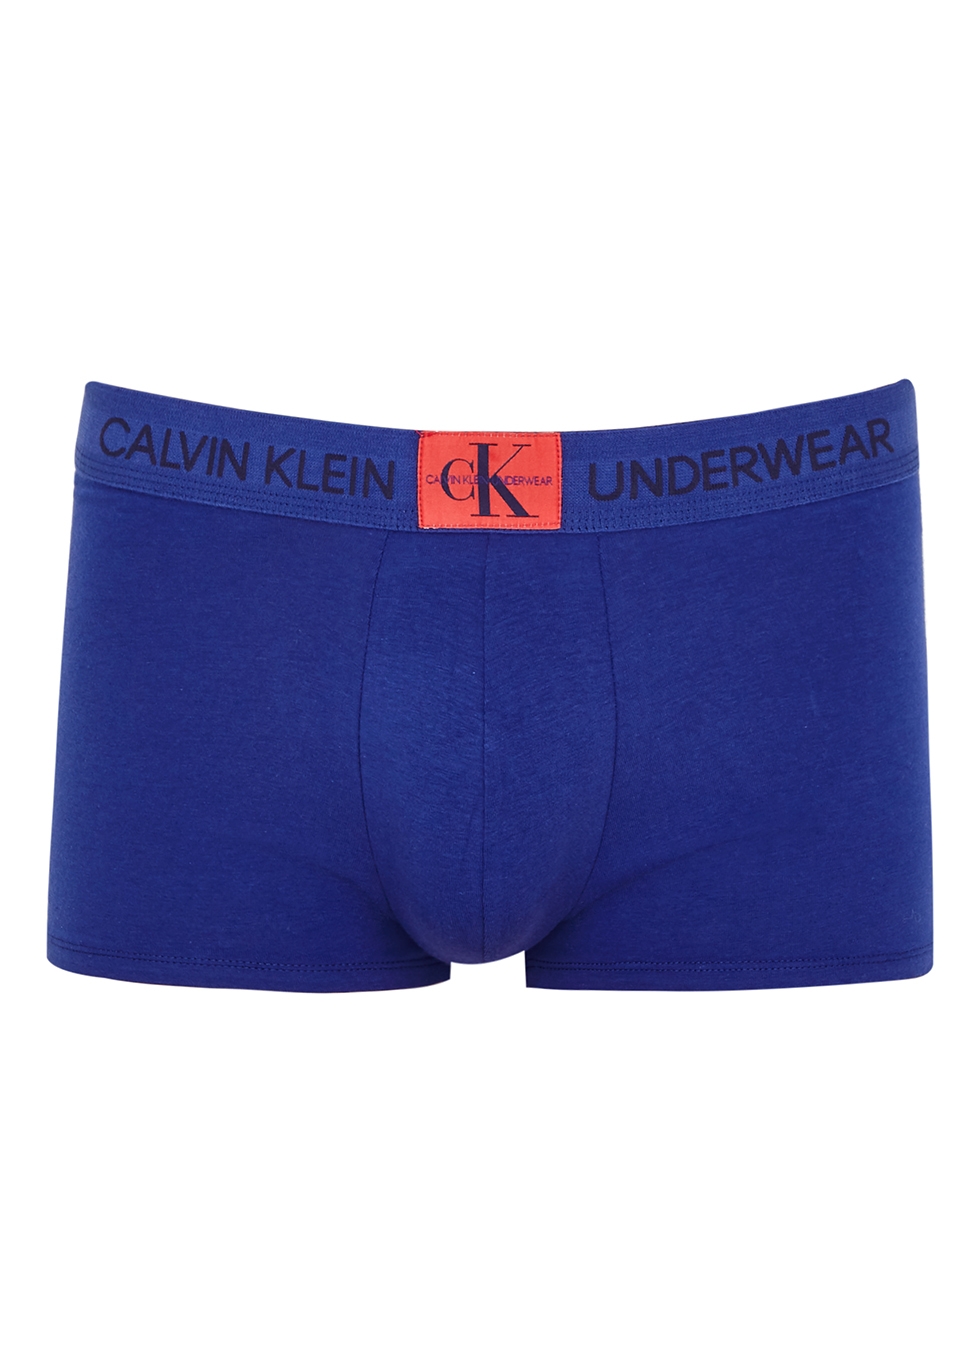 navy blue calvin klein boxers